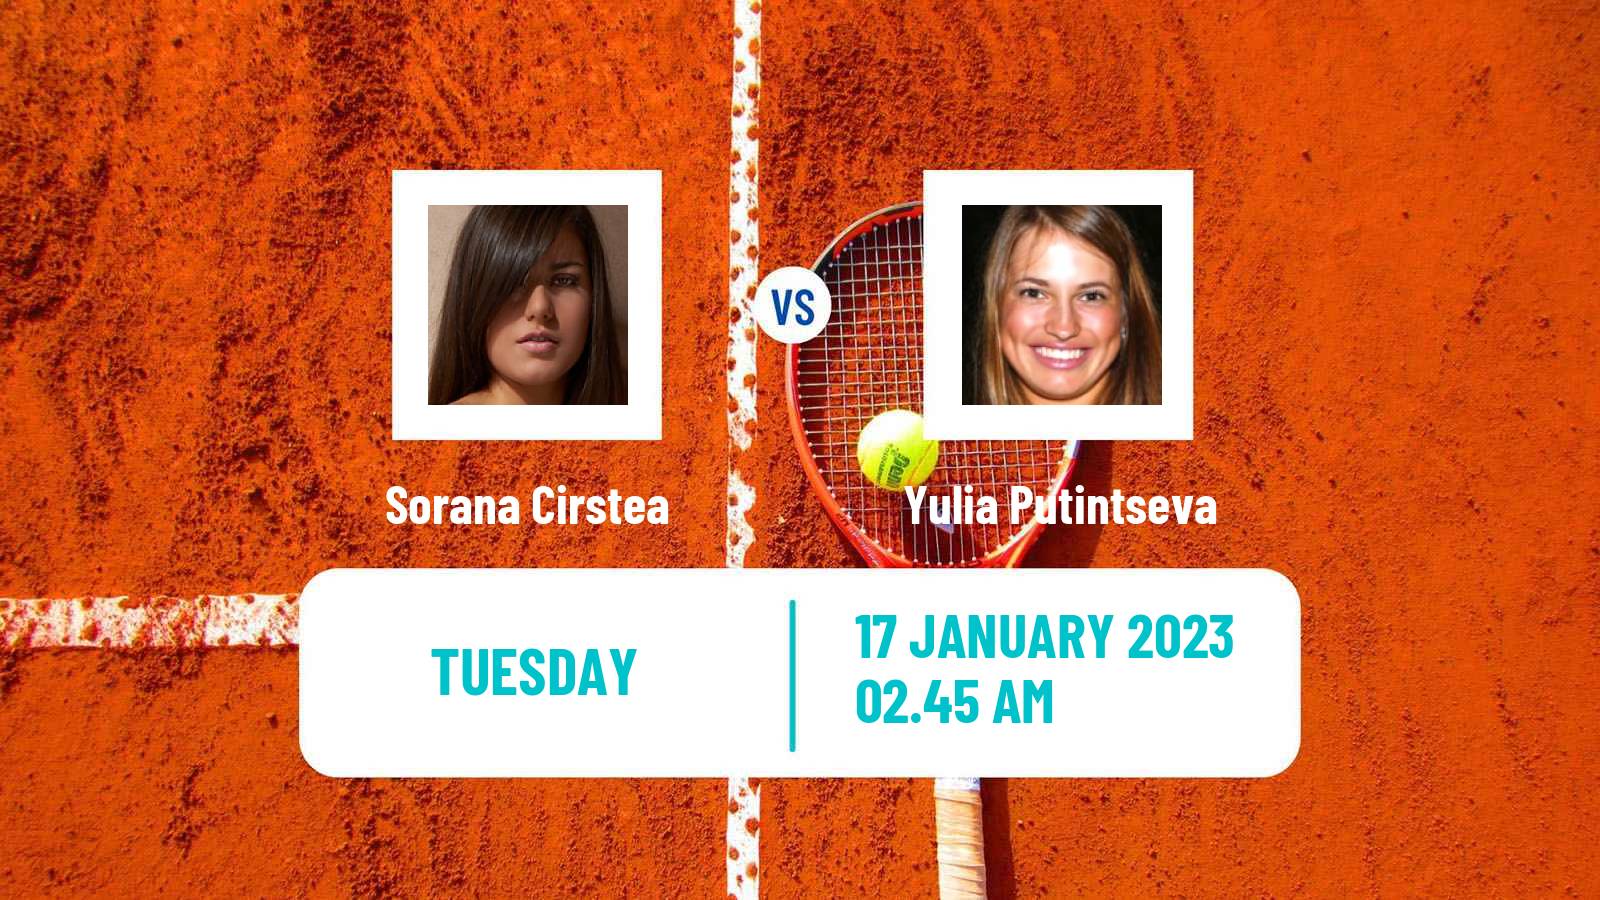 Tennis WTA Australian Open Sorana Cirstea - Yulia Putintseva